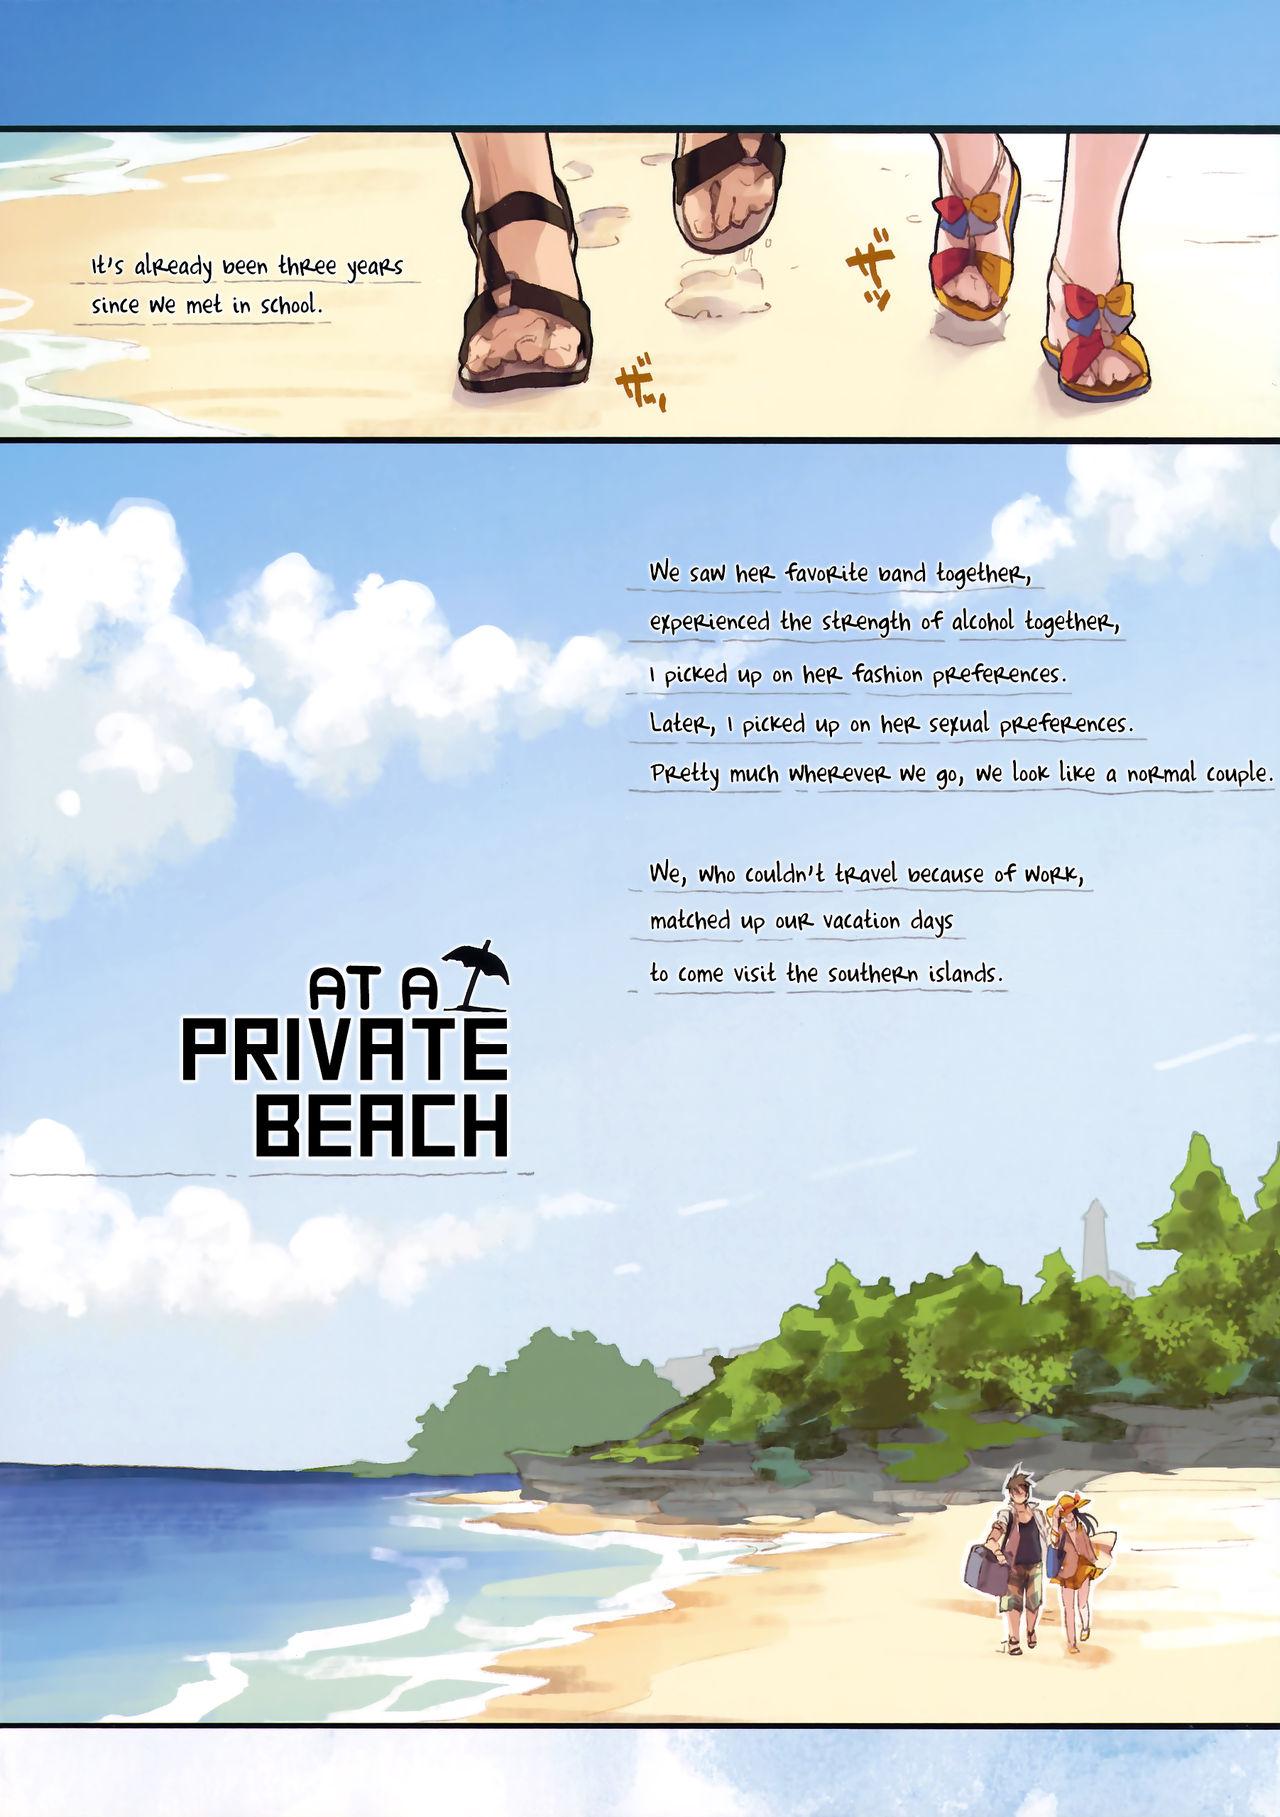 )] Private beach nite 3